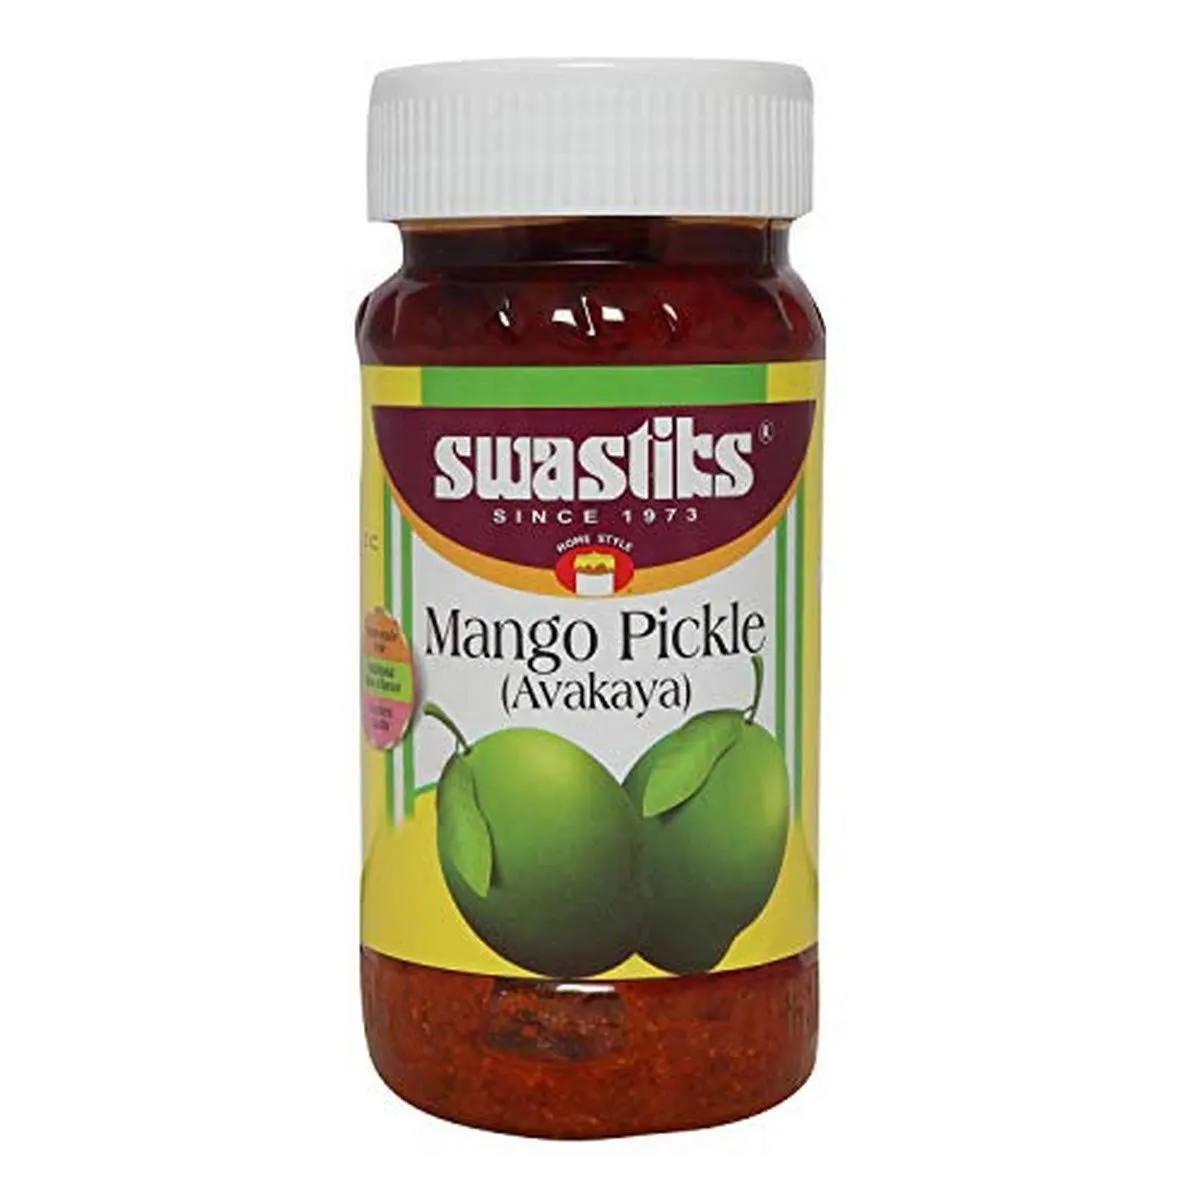 Put Your Marshmallow Glasses On and Choose Joy - The Ruffled Mango